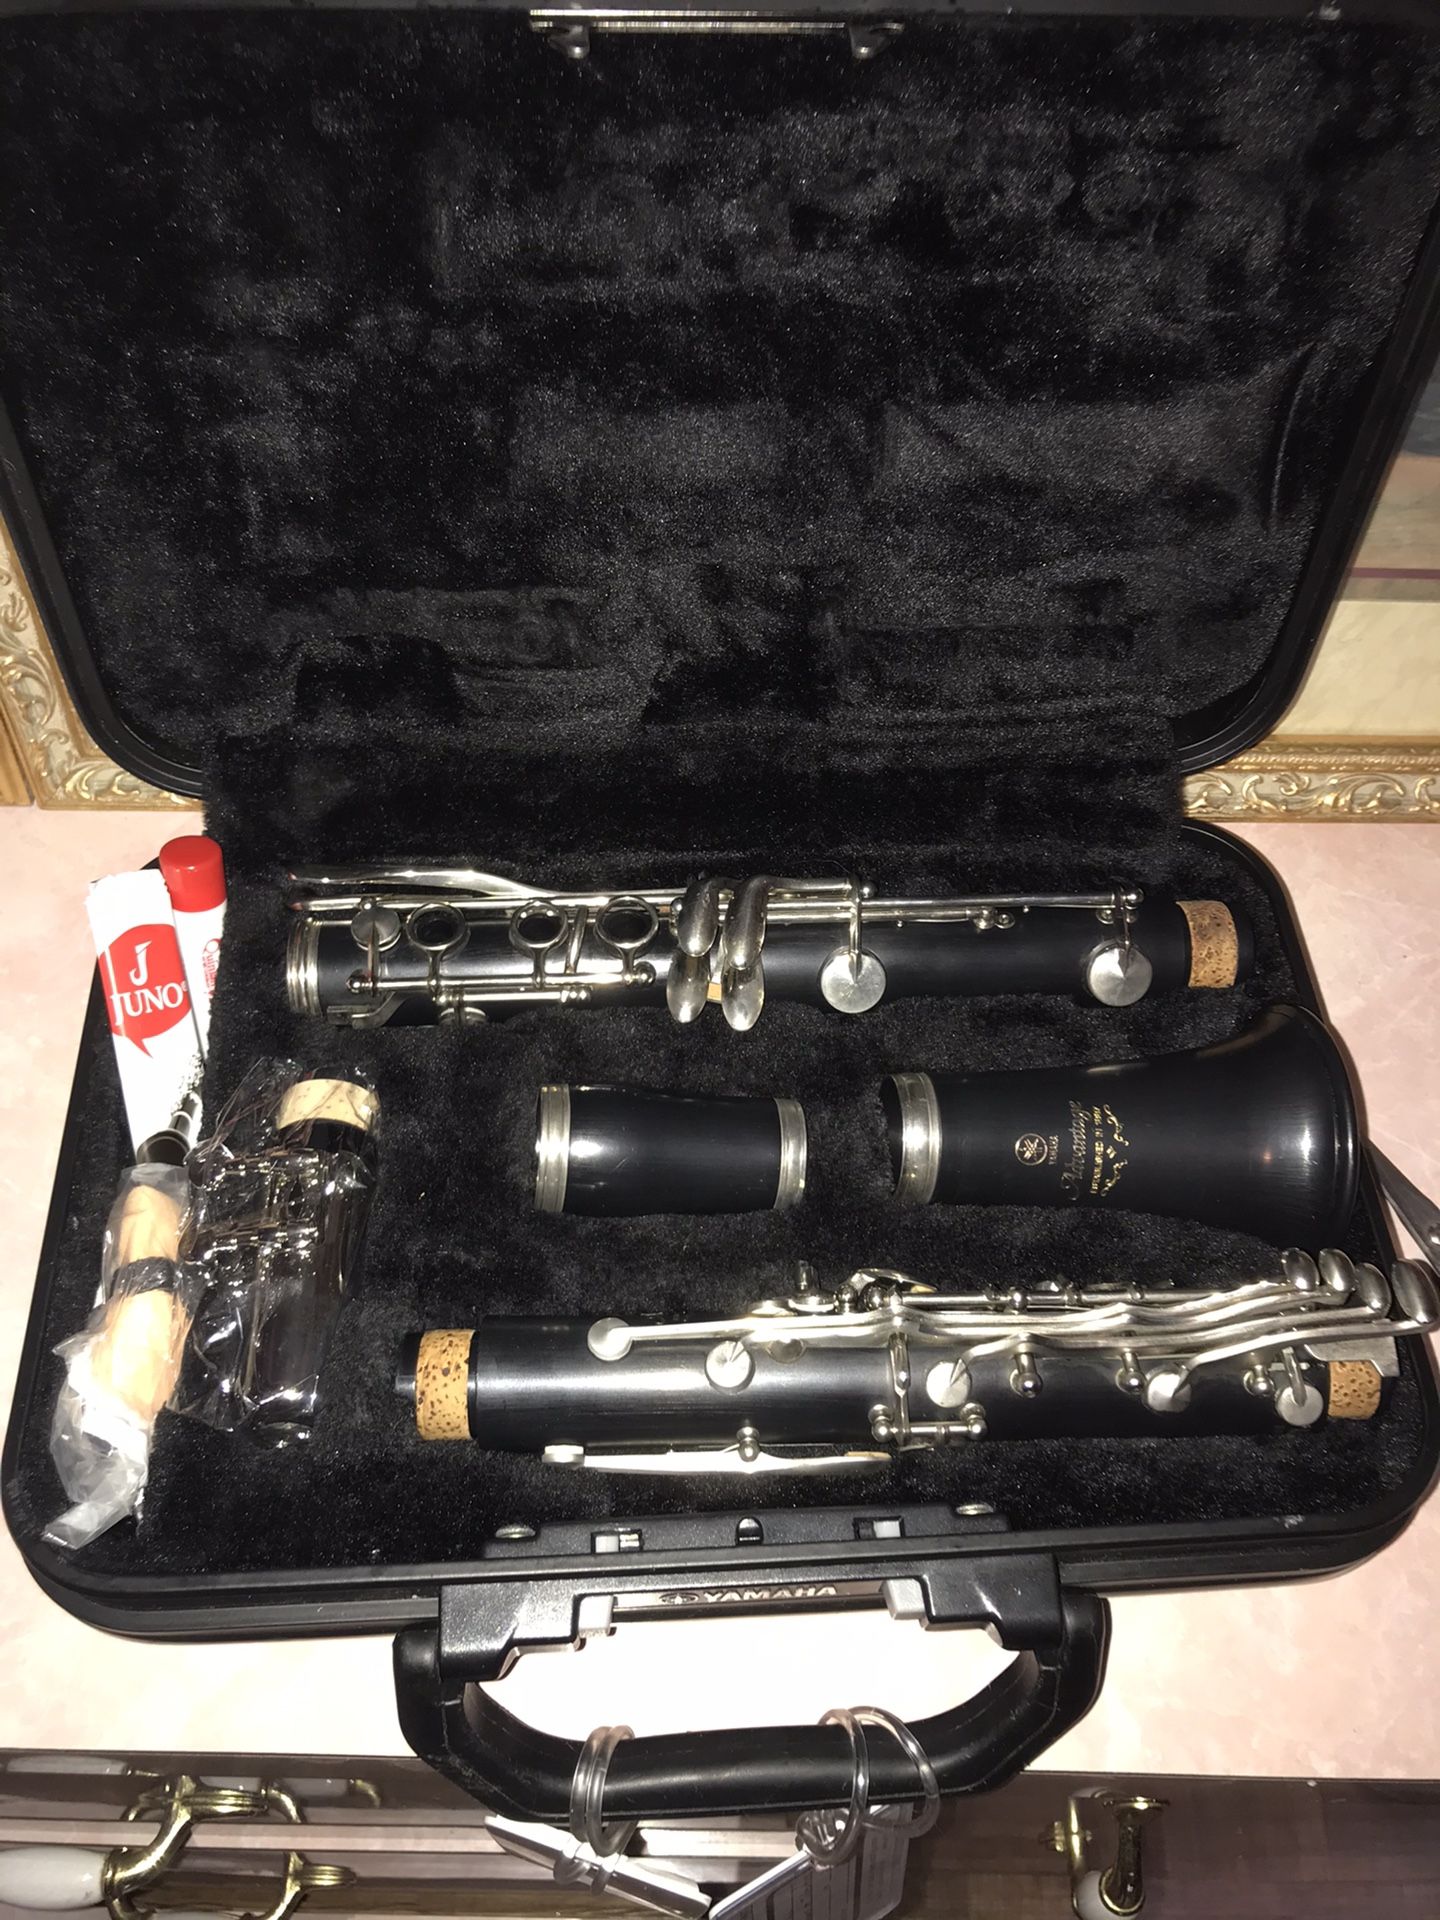 Clarinet set with case